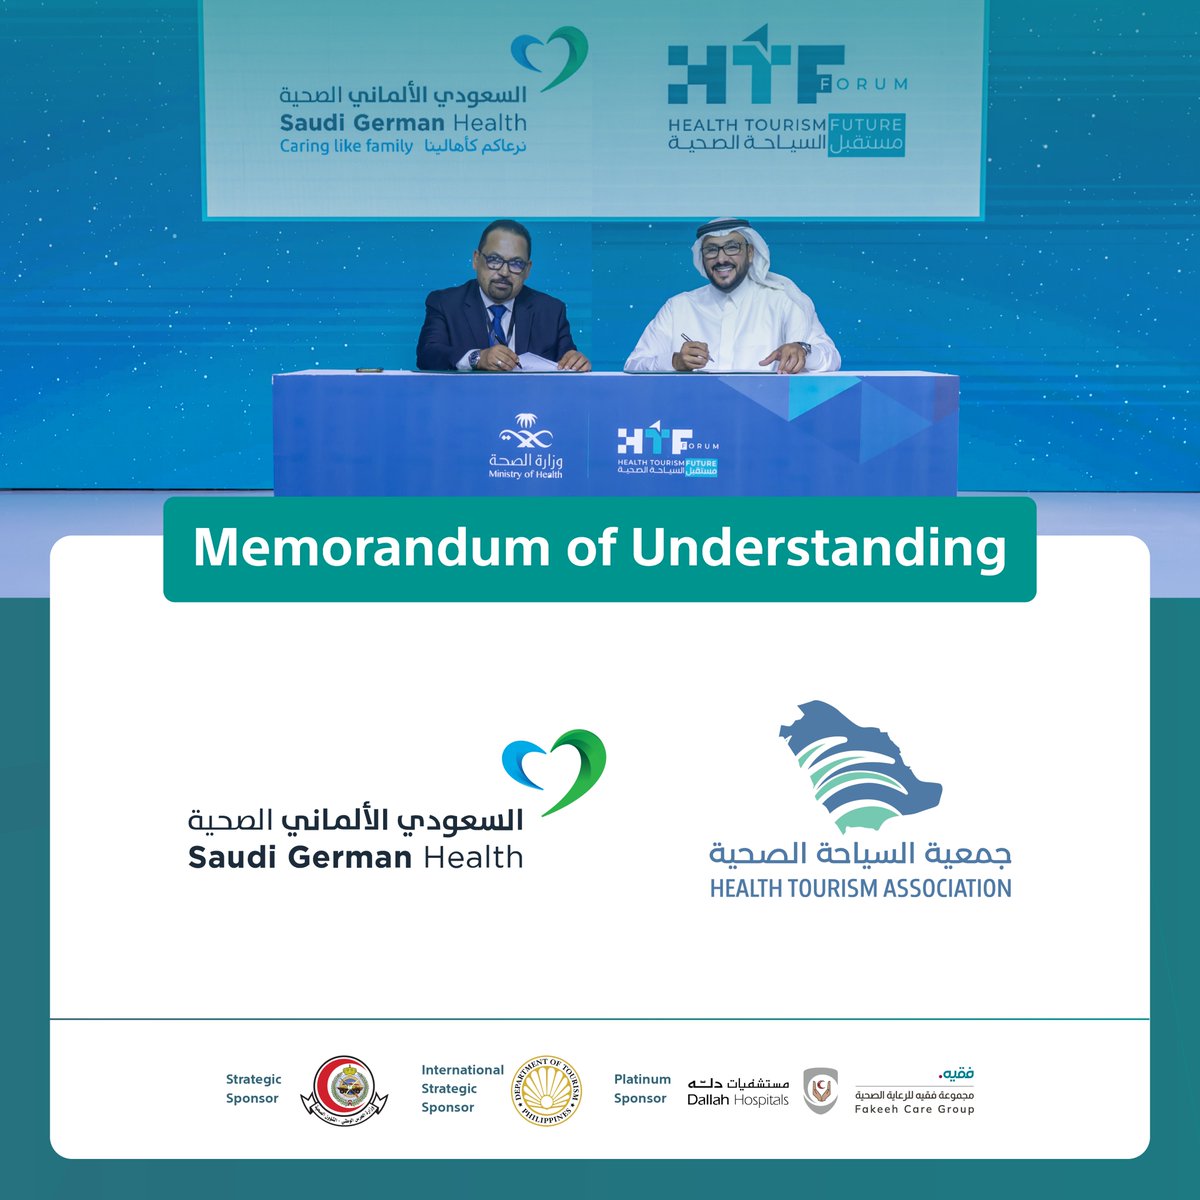 Signing a memorandum of understanding between the Health Tourism Association and Saudi German Hospital Health #future_health_toursim_forum